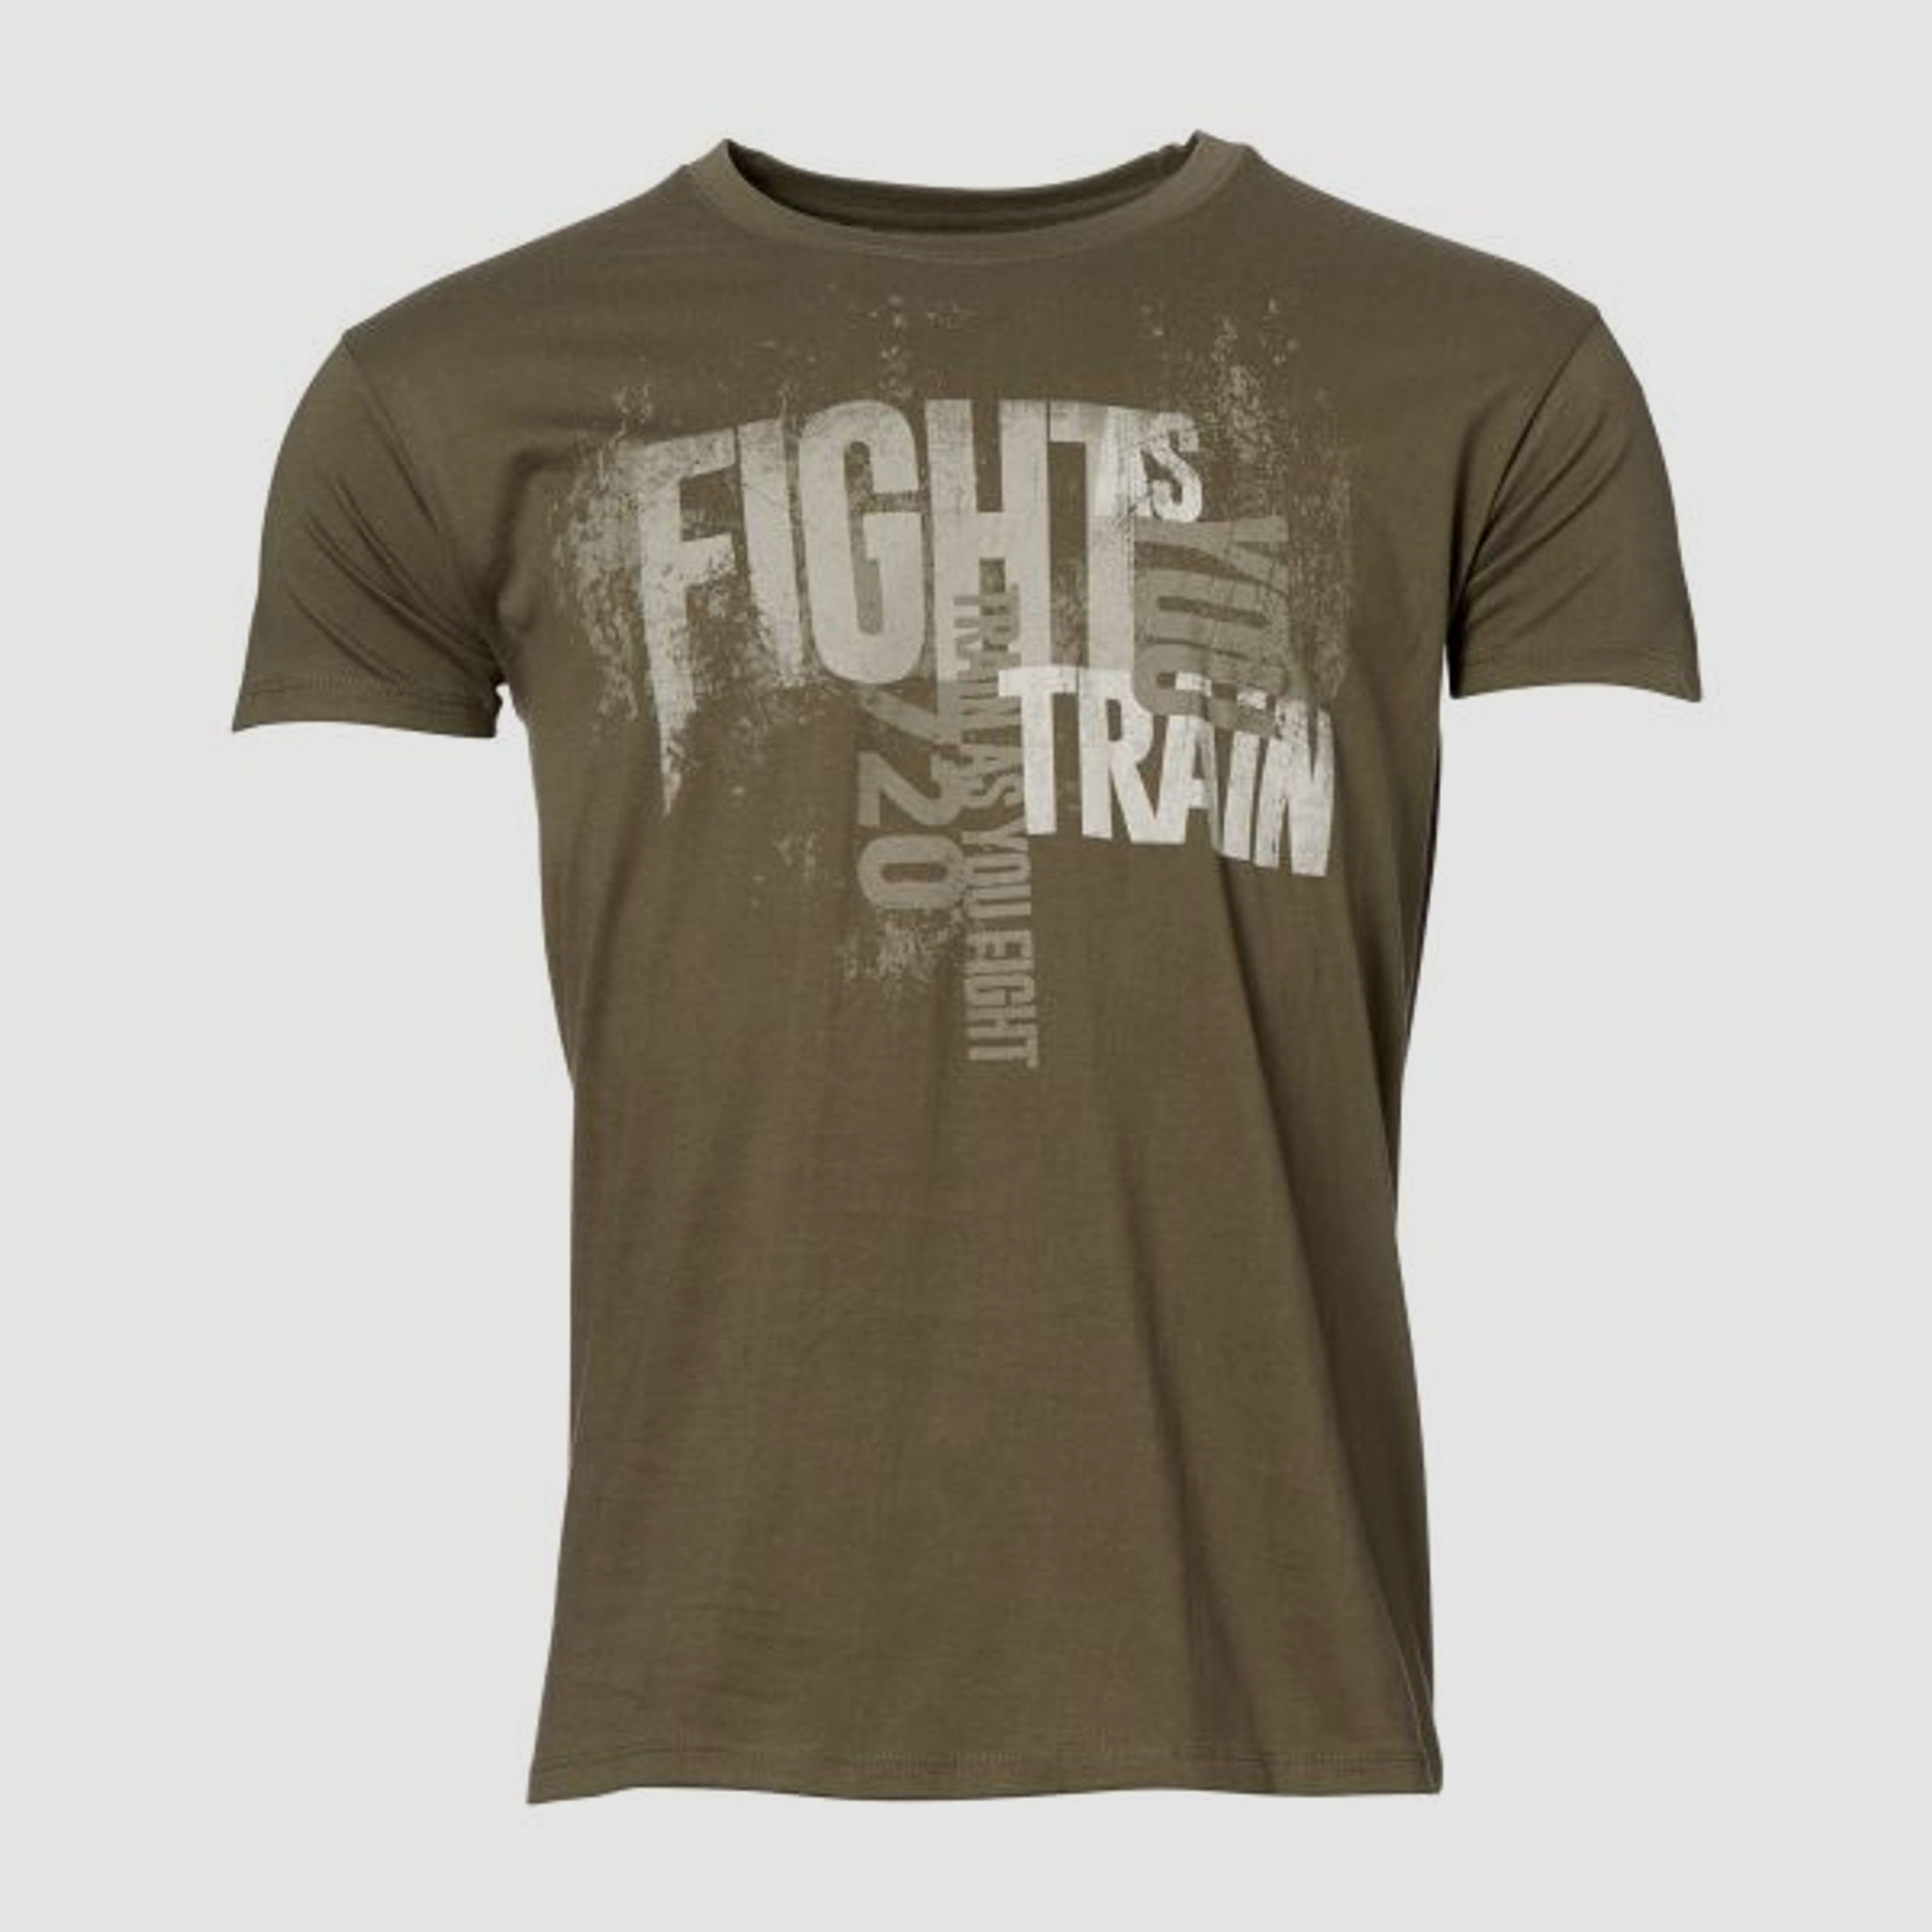 720gear 720gear T-Shirt Fight as you train army